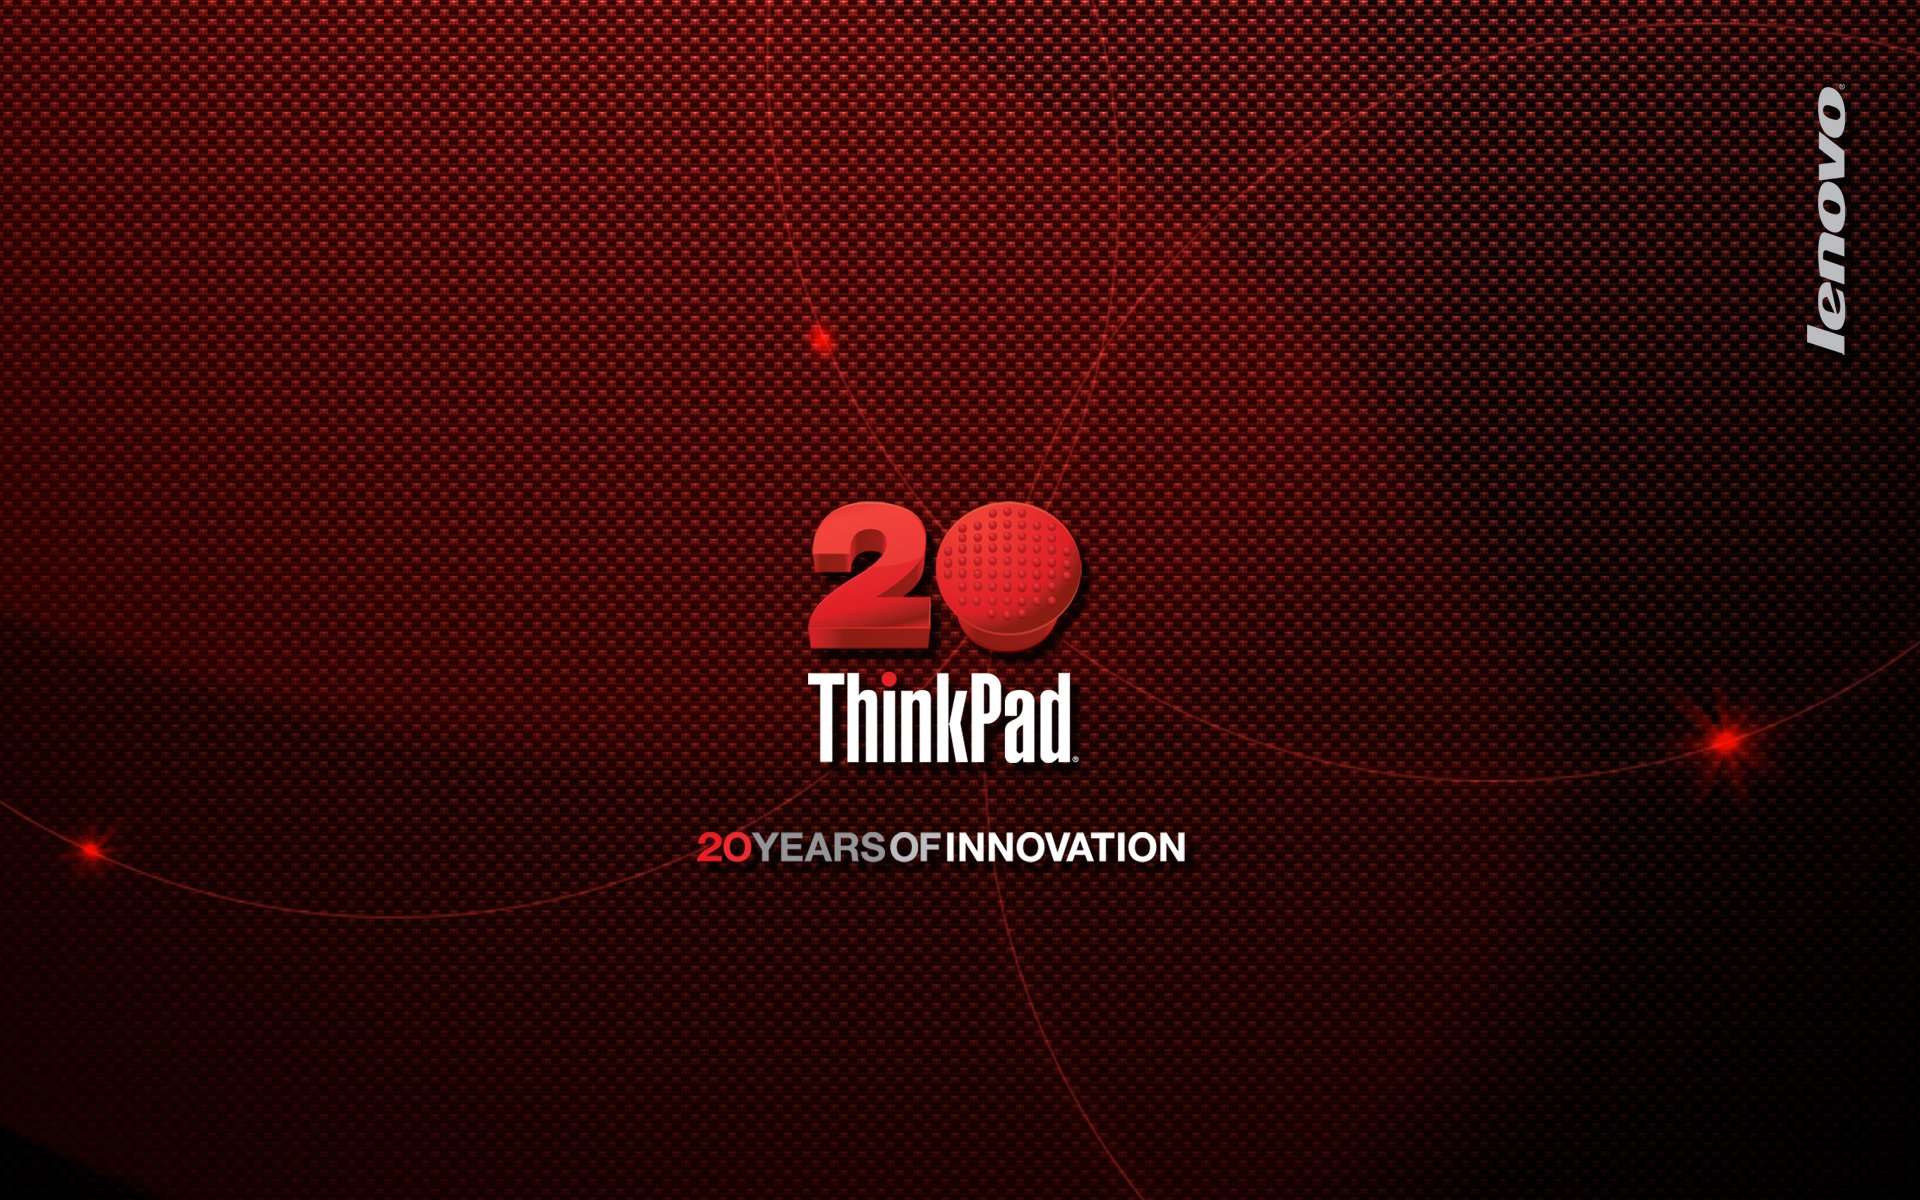 Free Download Lenovo Thinkpad Backgrounds Pixelstalk Net